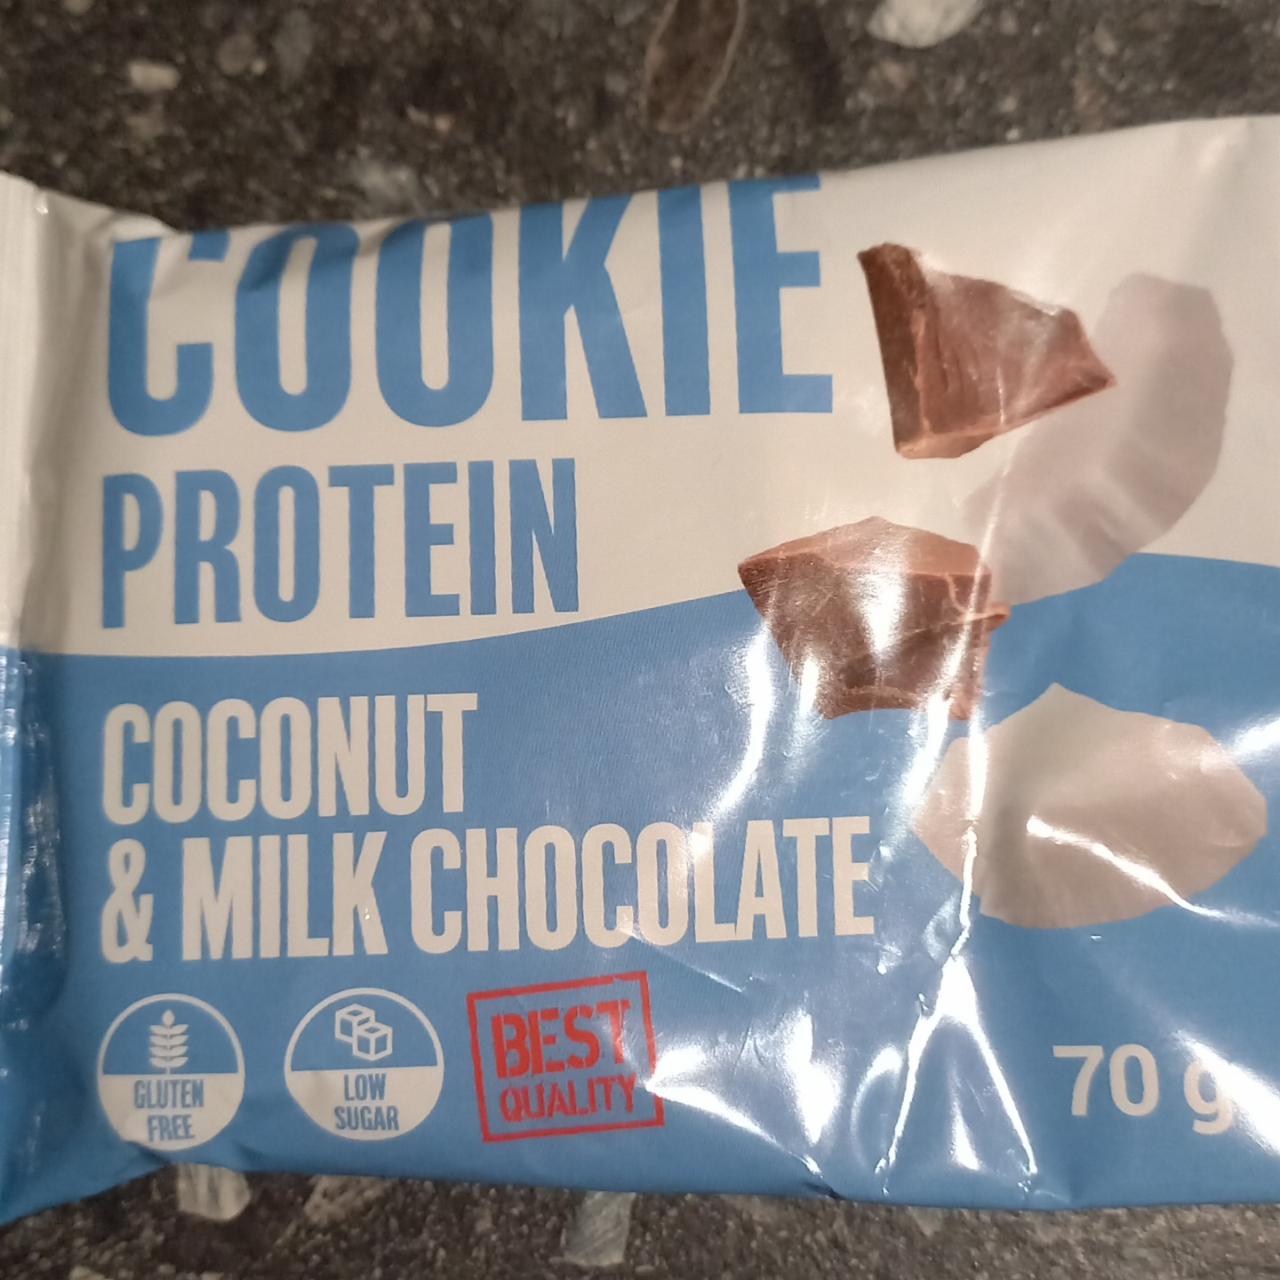 Fotografie - Cookie protein coconut & milk chocolate Descanti